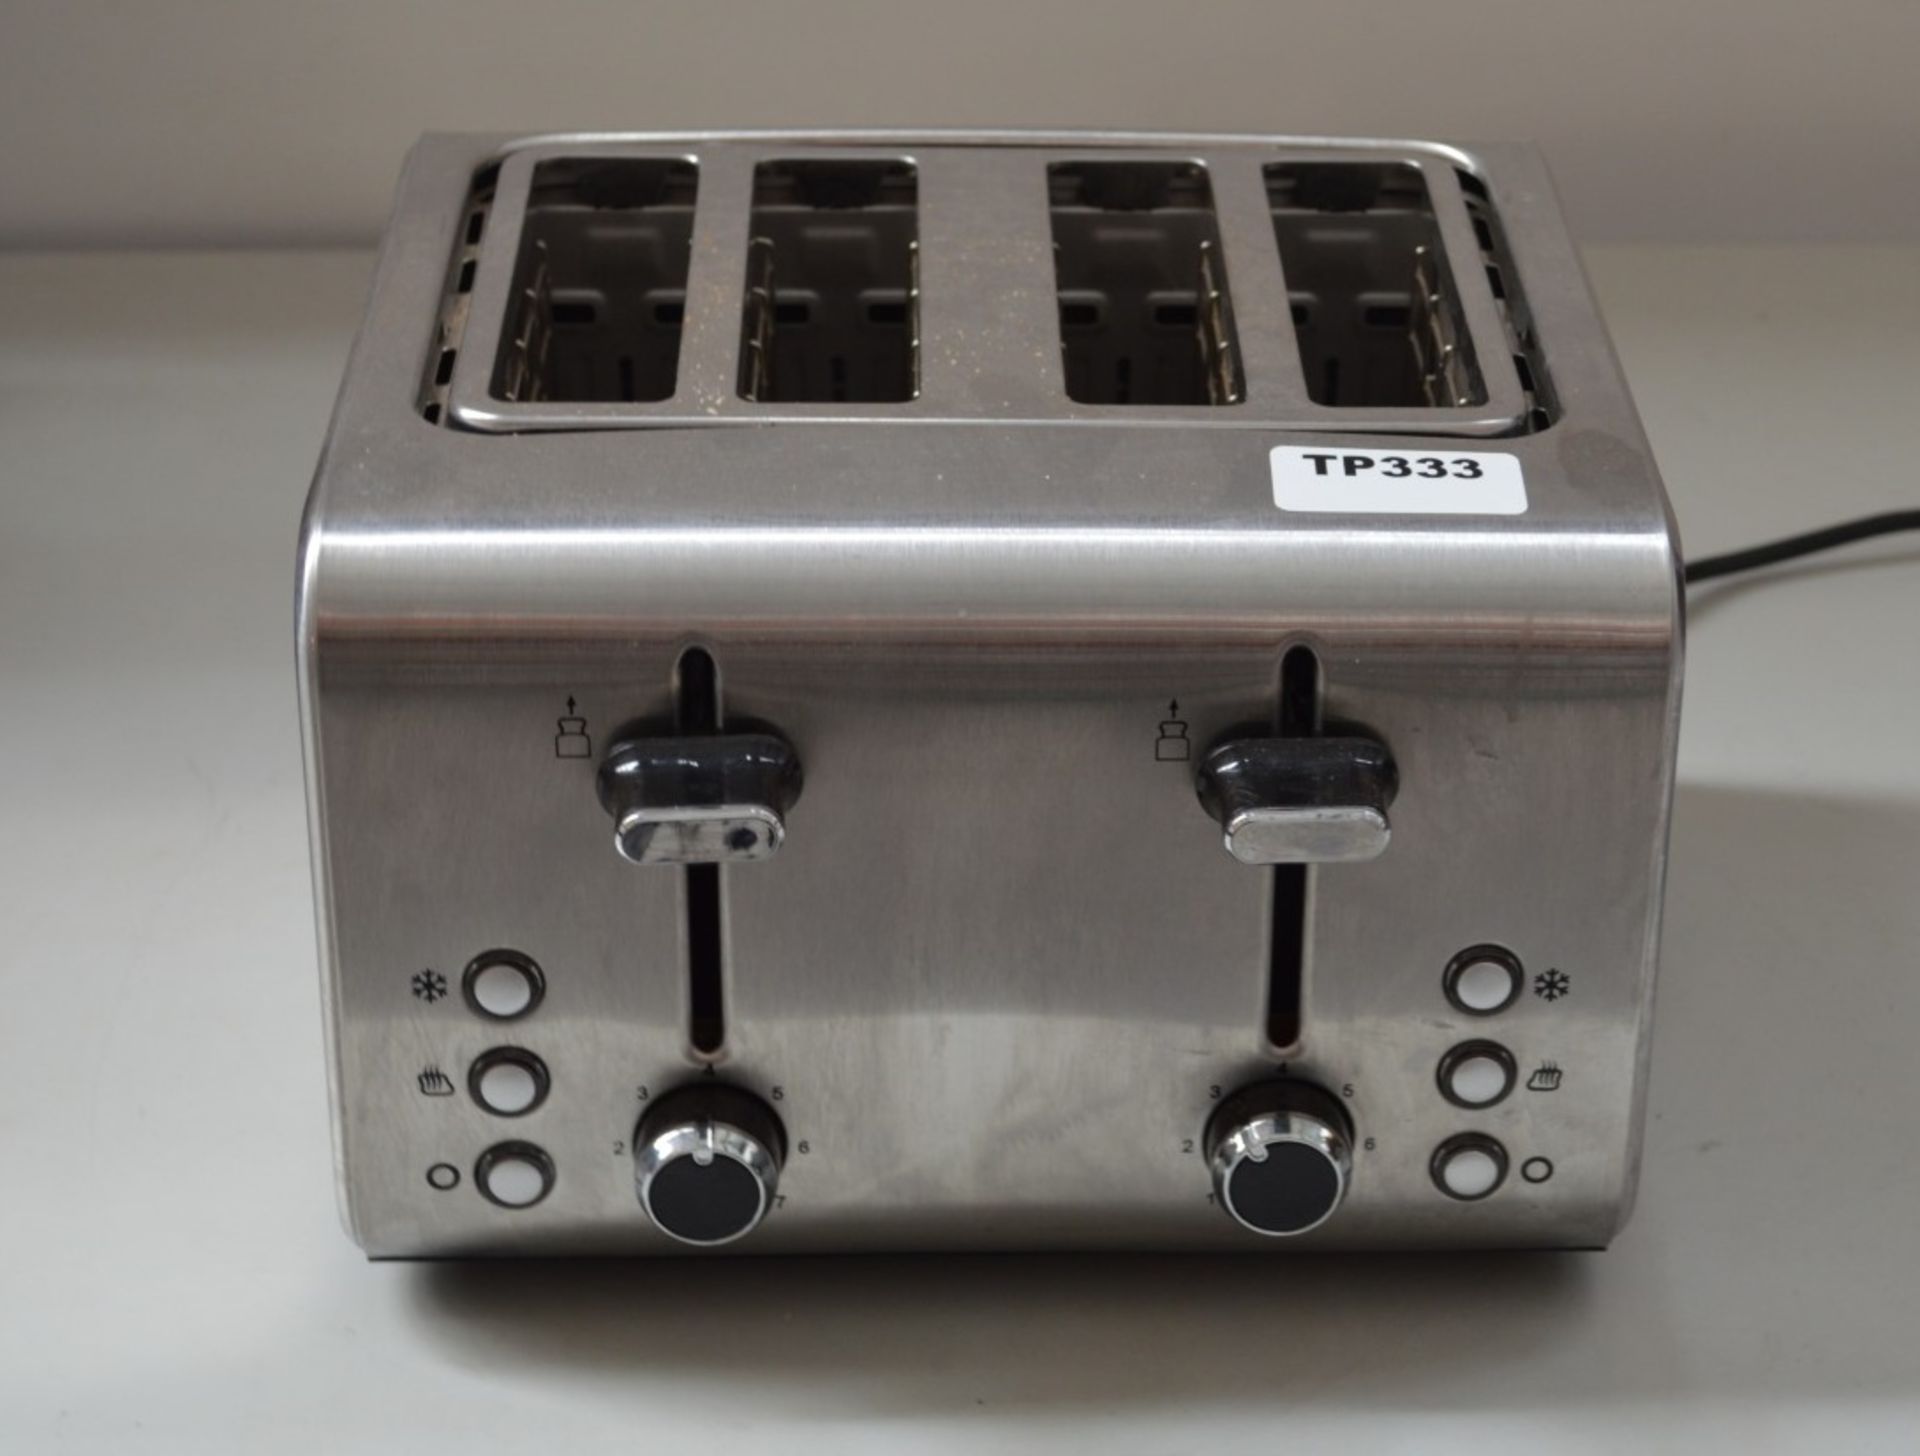 1 x Tesco 4TSS15 Toaster - Ref TP333